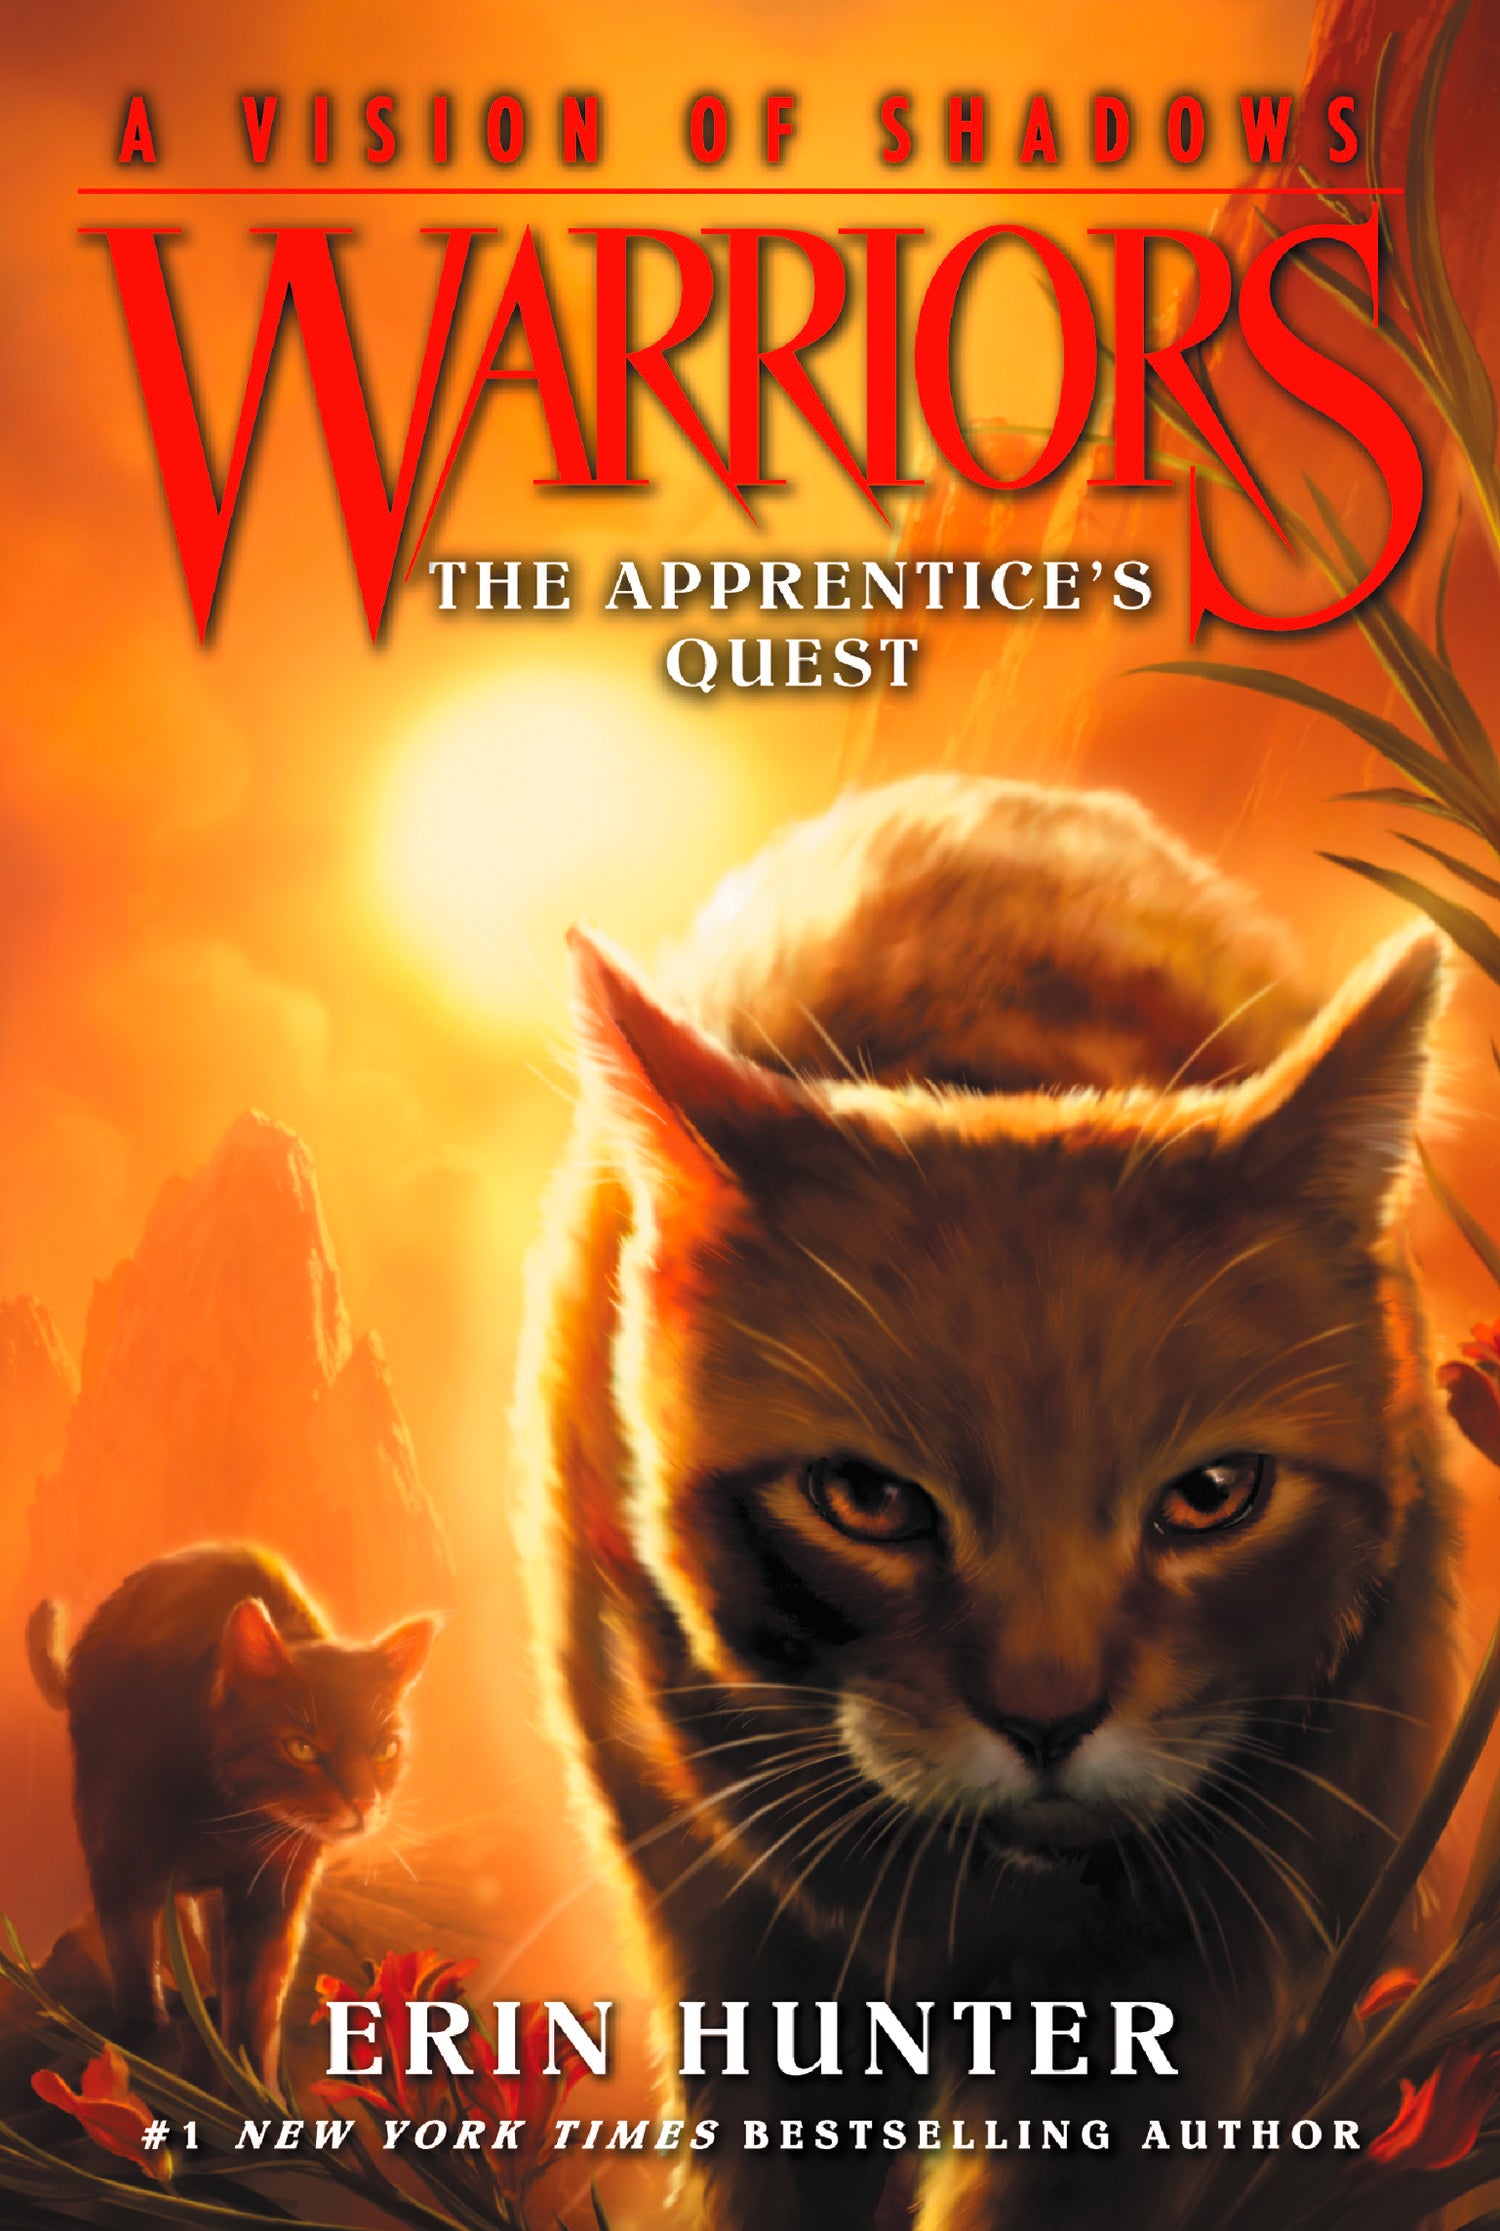 Warriors Super Edition: Bluestar's Prophecy by Hunter, Erin